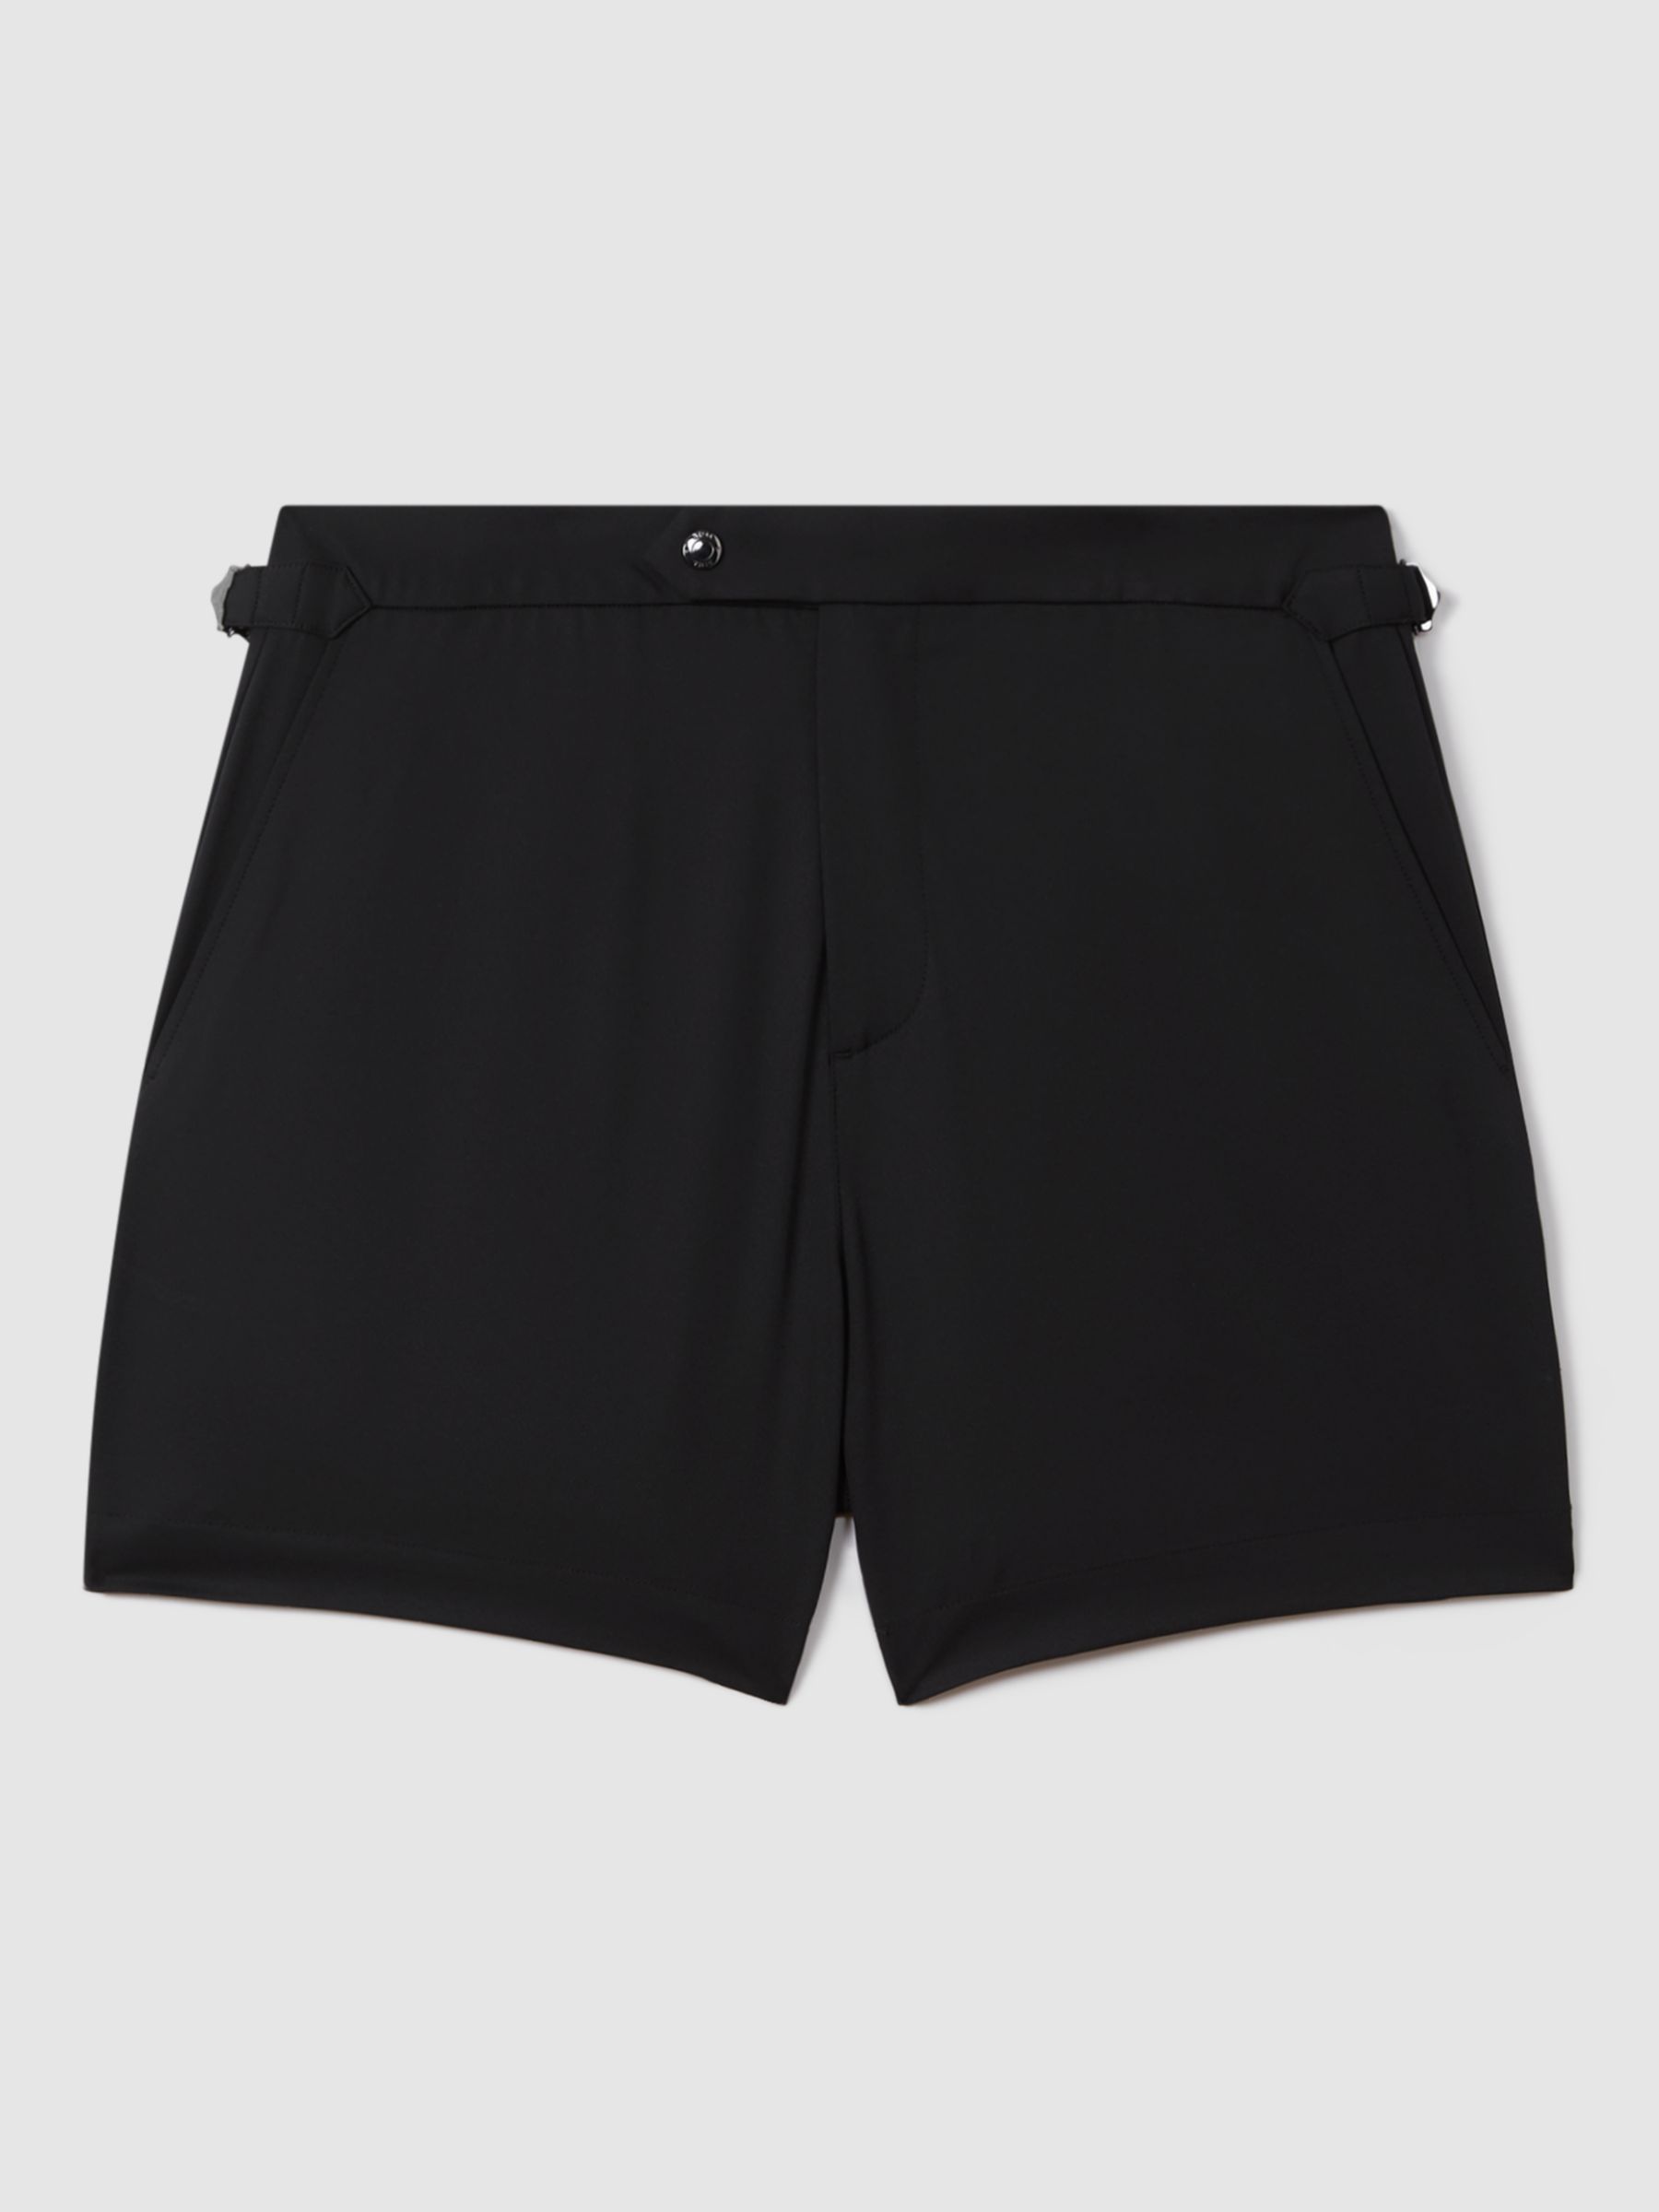 Reiss Sun Plain Swim Shorts, Black, XXL